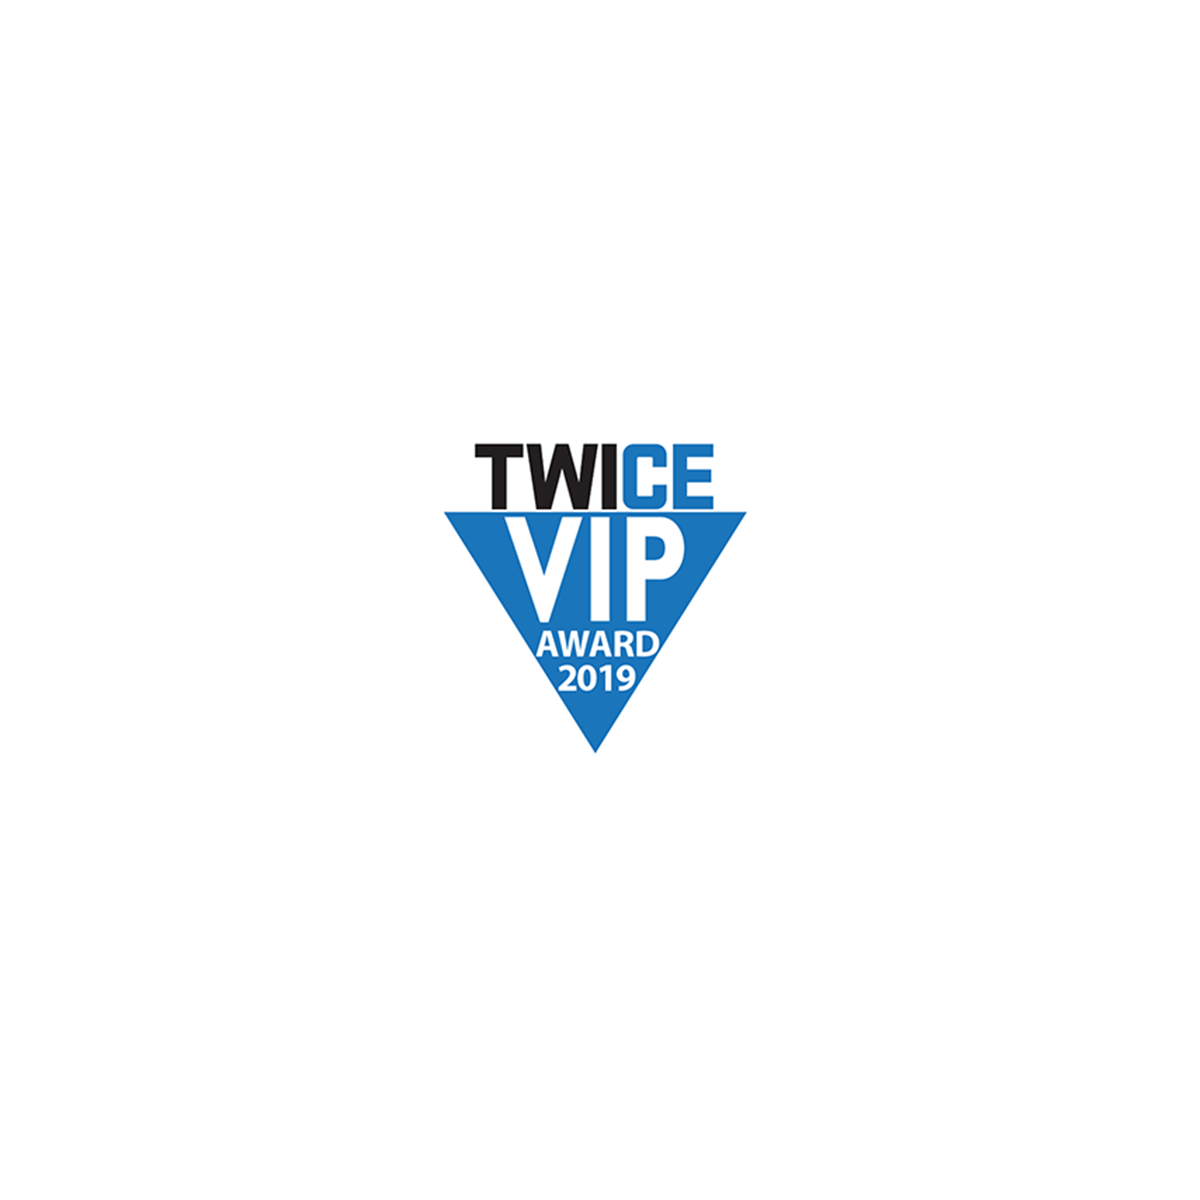 TwiceVIP award logo